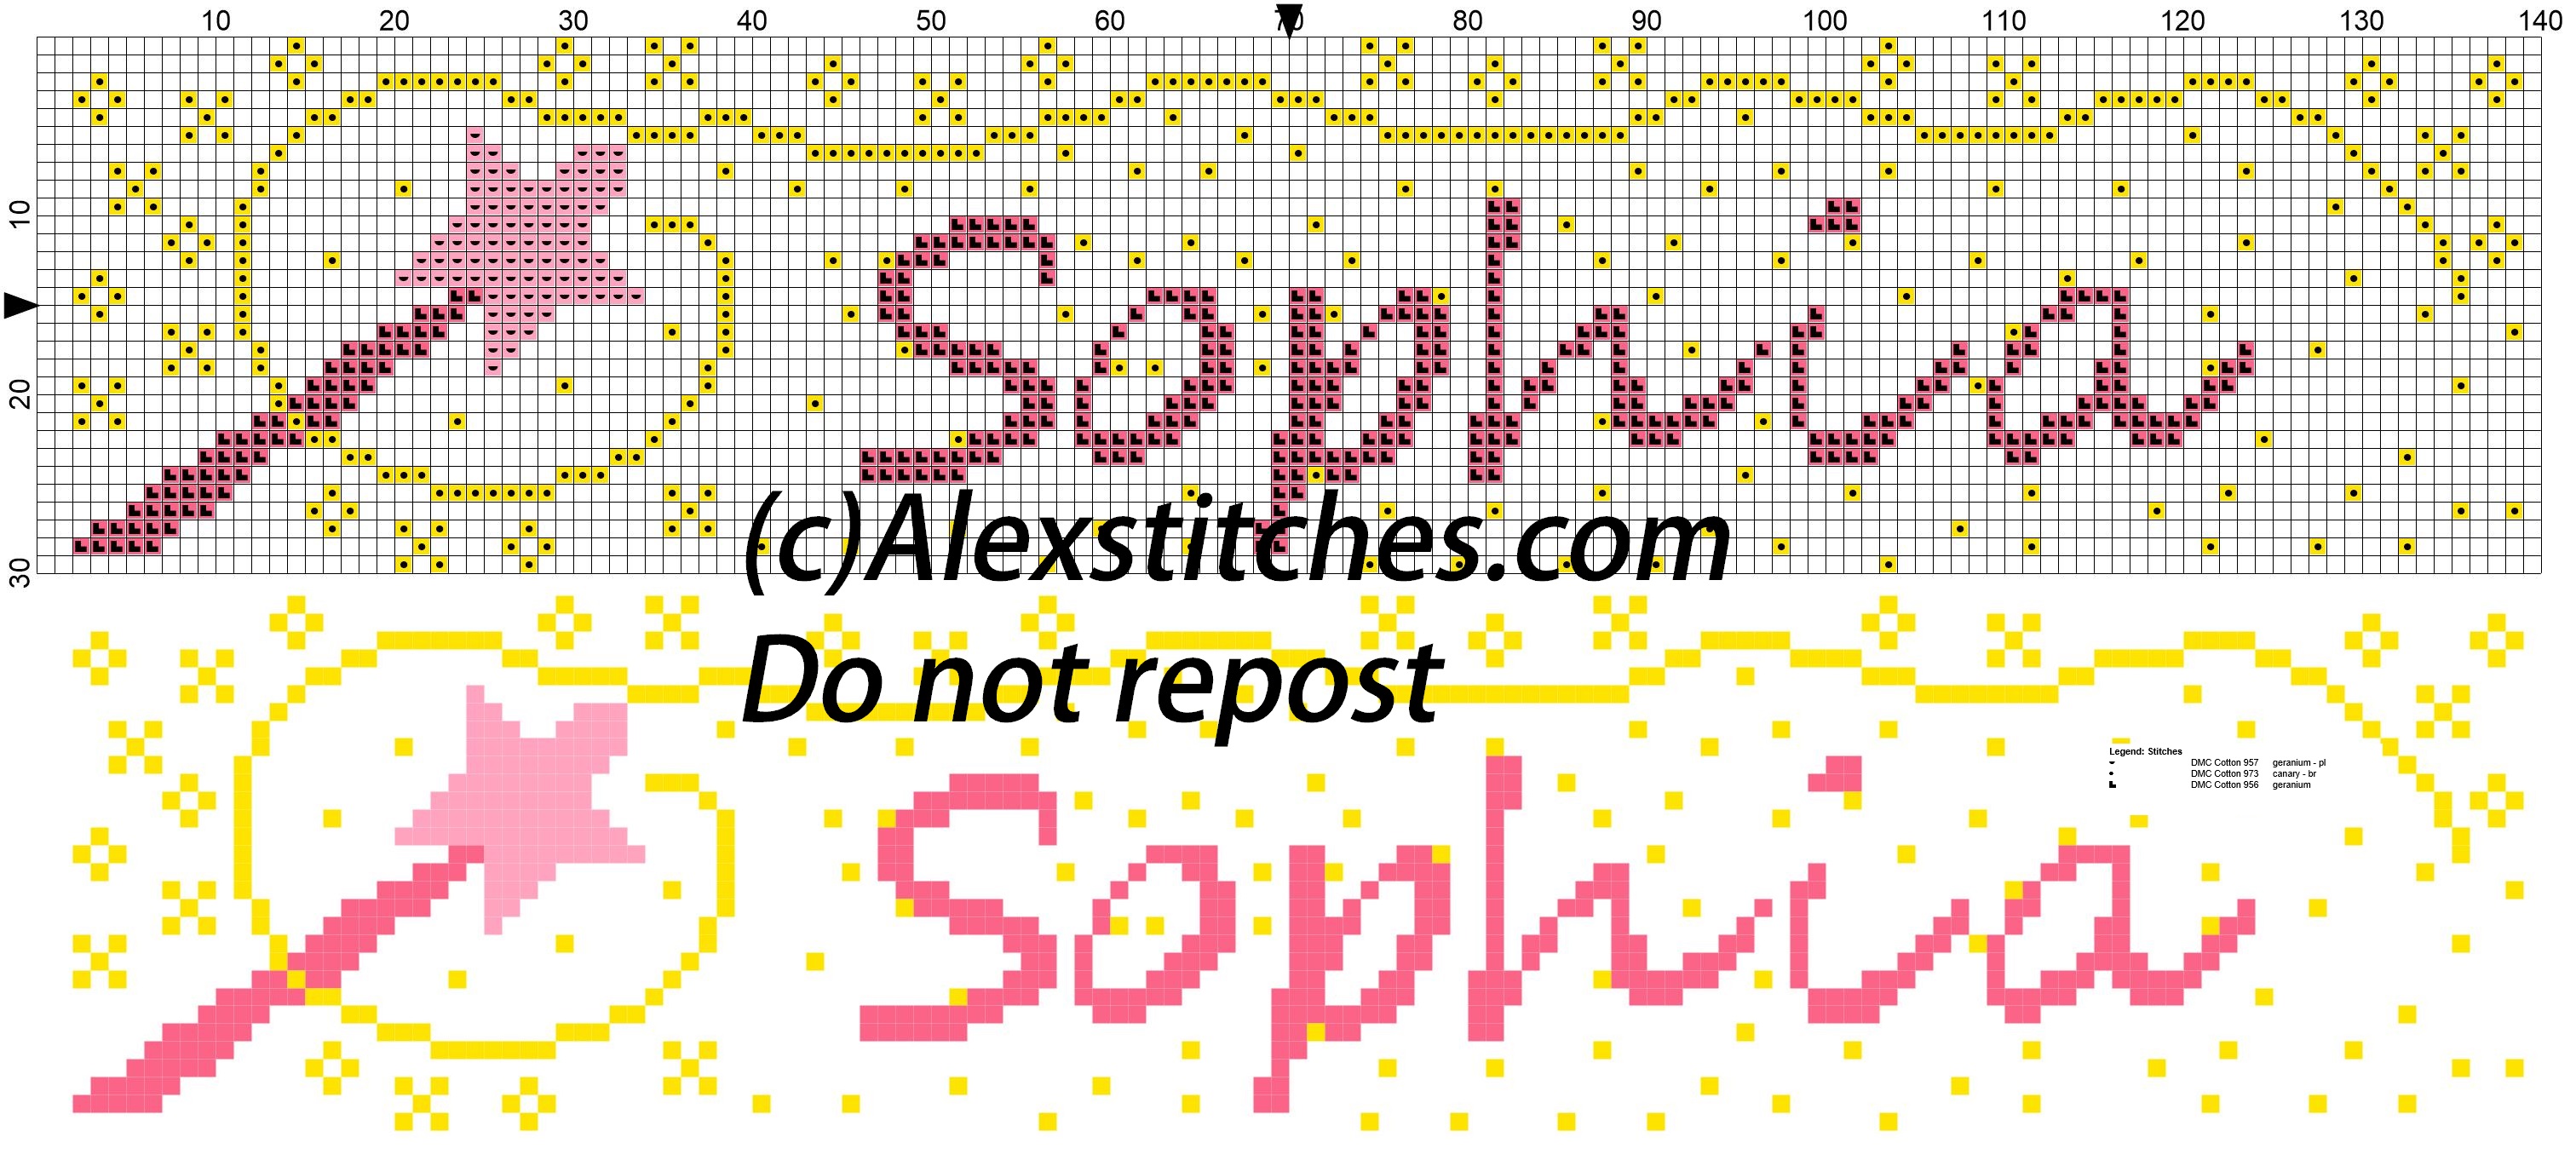 Sophia name with magic wand